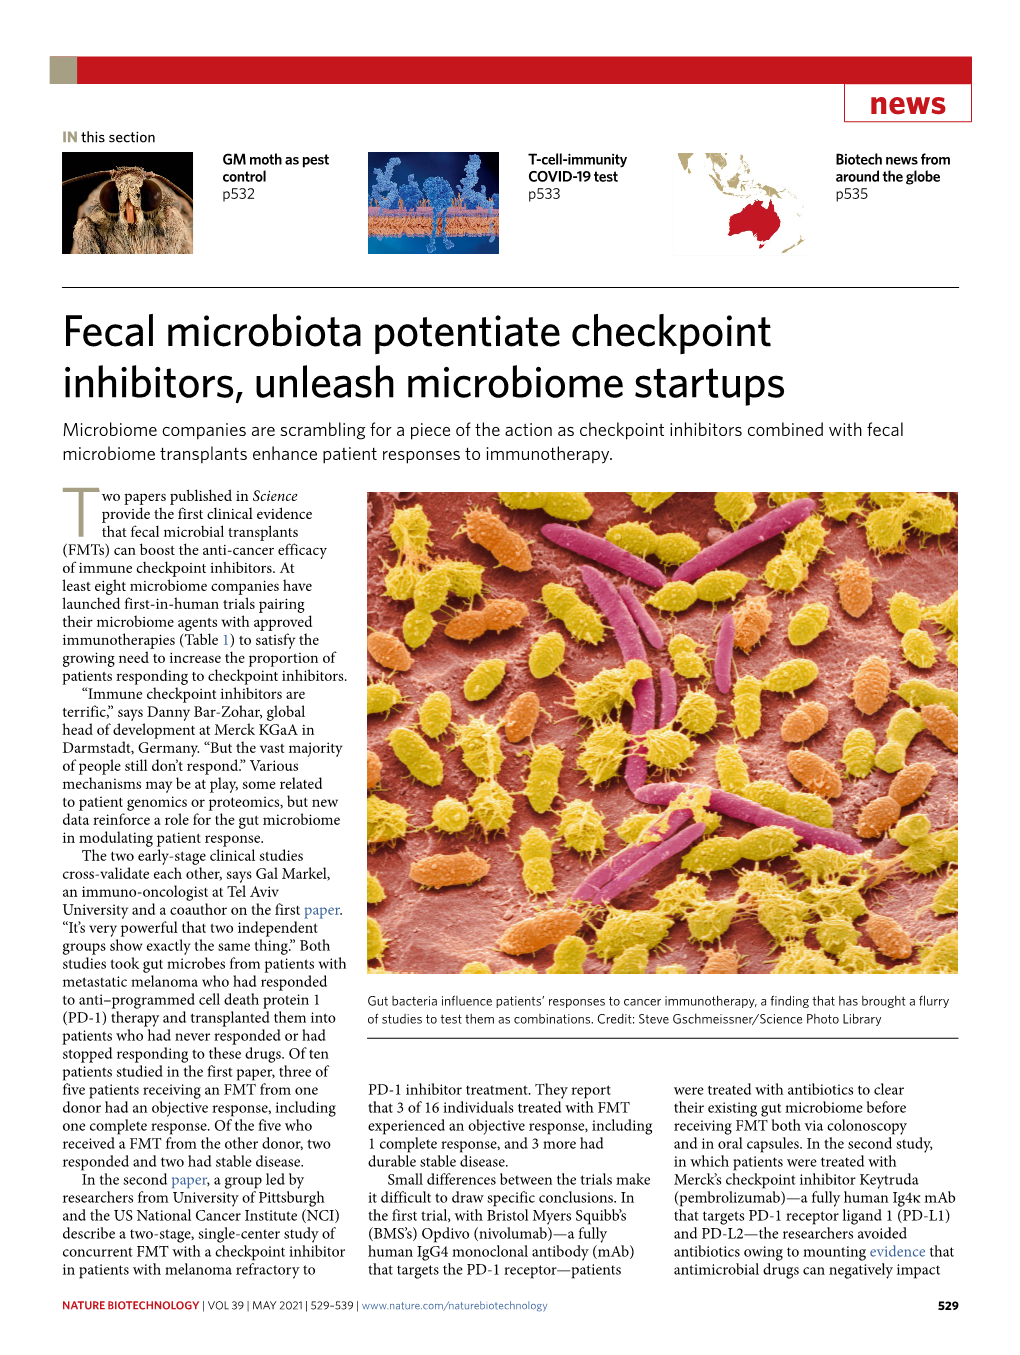 Fecal Microbiota Potentiate Checkpoint Inhibitors, Unleash Microbiome